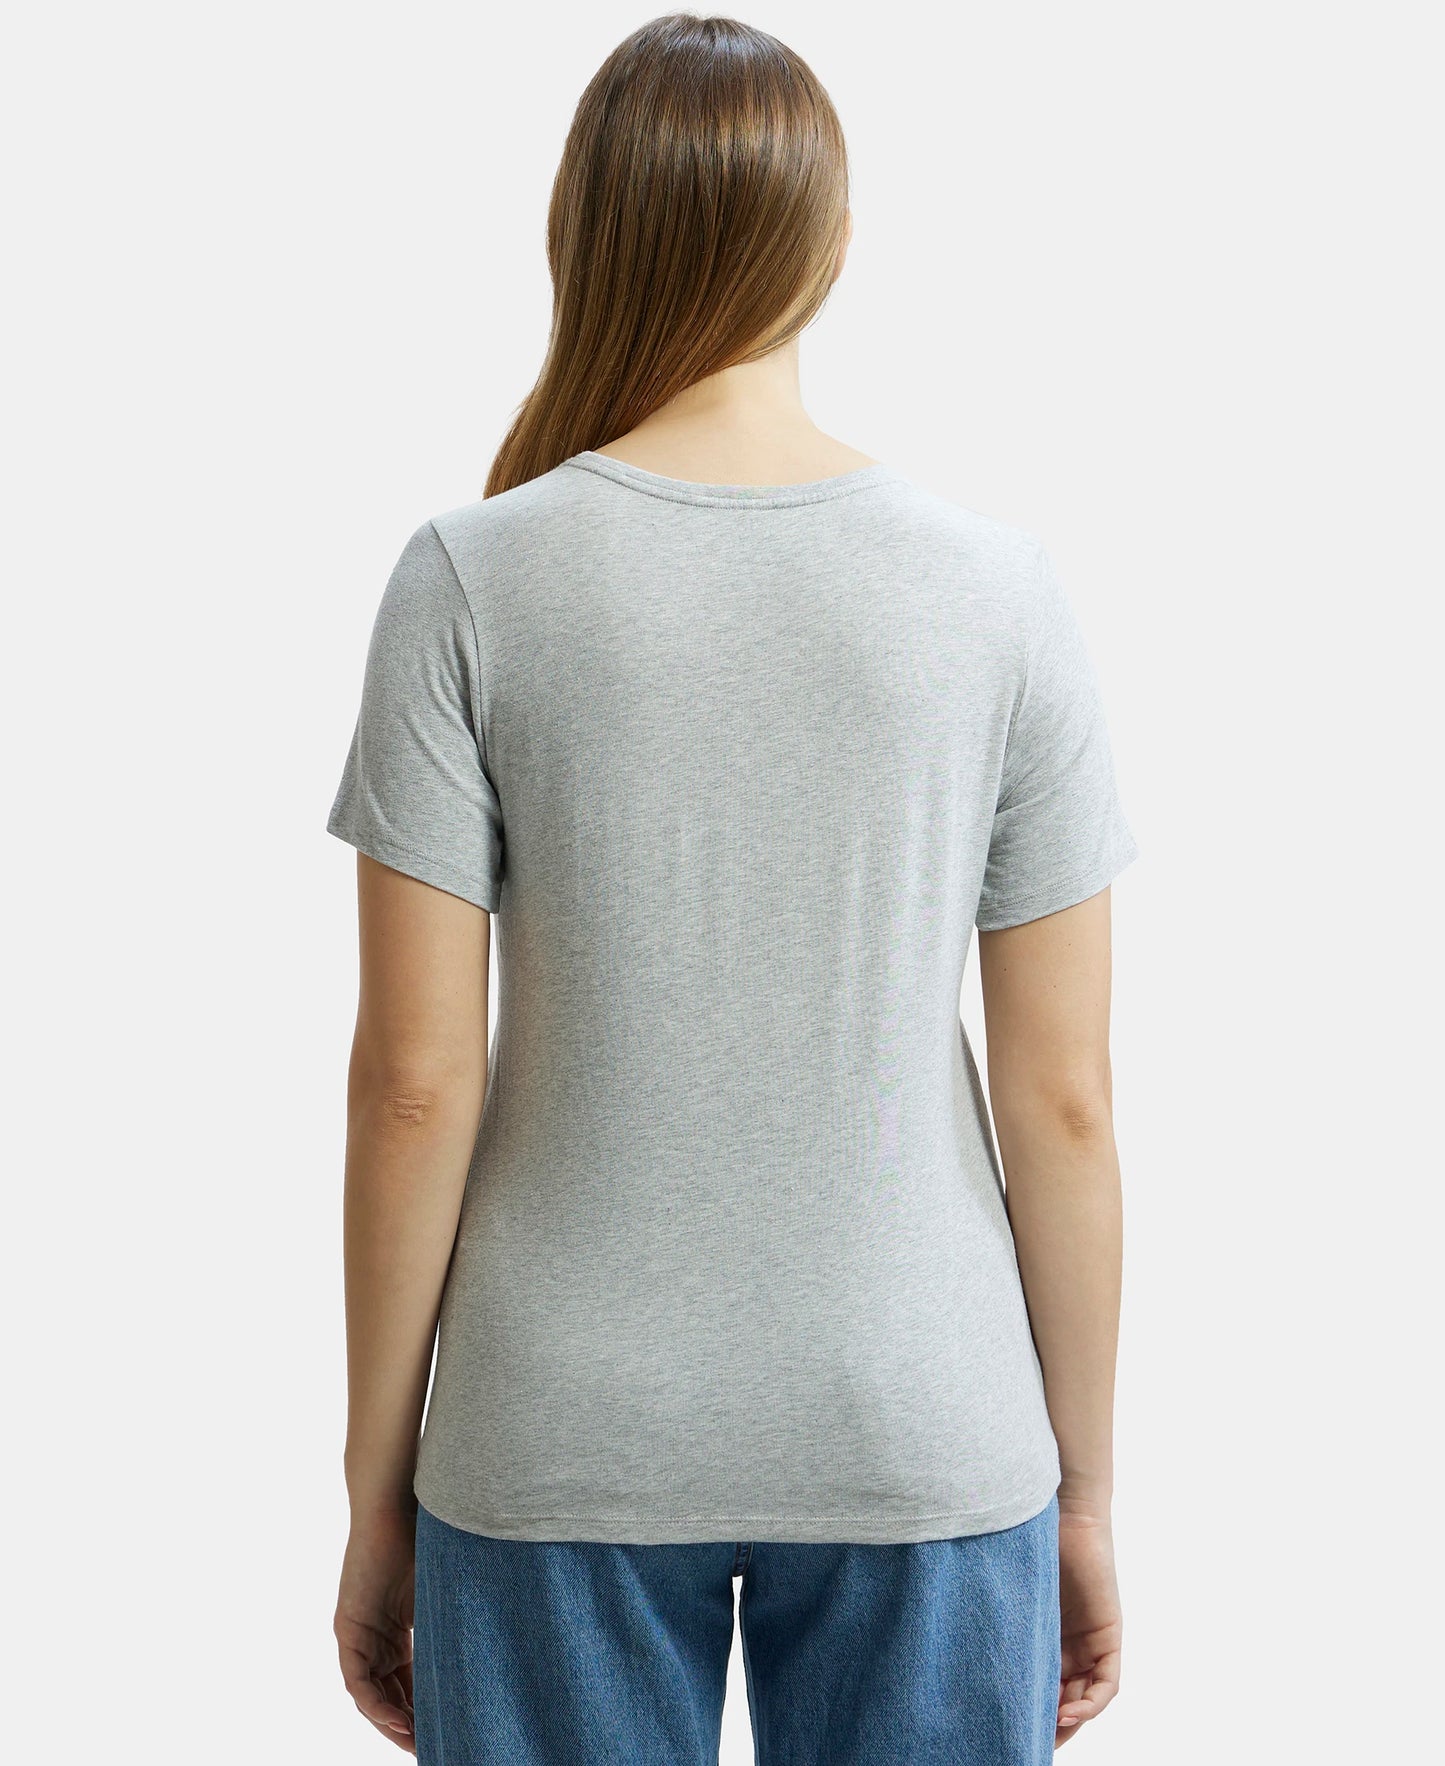 Super Combed Cotton Elastane Stretch Regular Fit Graphic Printed Round Neck Half Sleeve T-Shirt  - Light grey melange print044-3